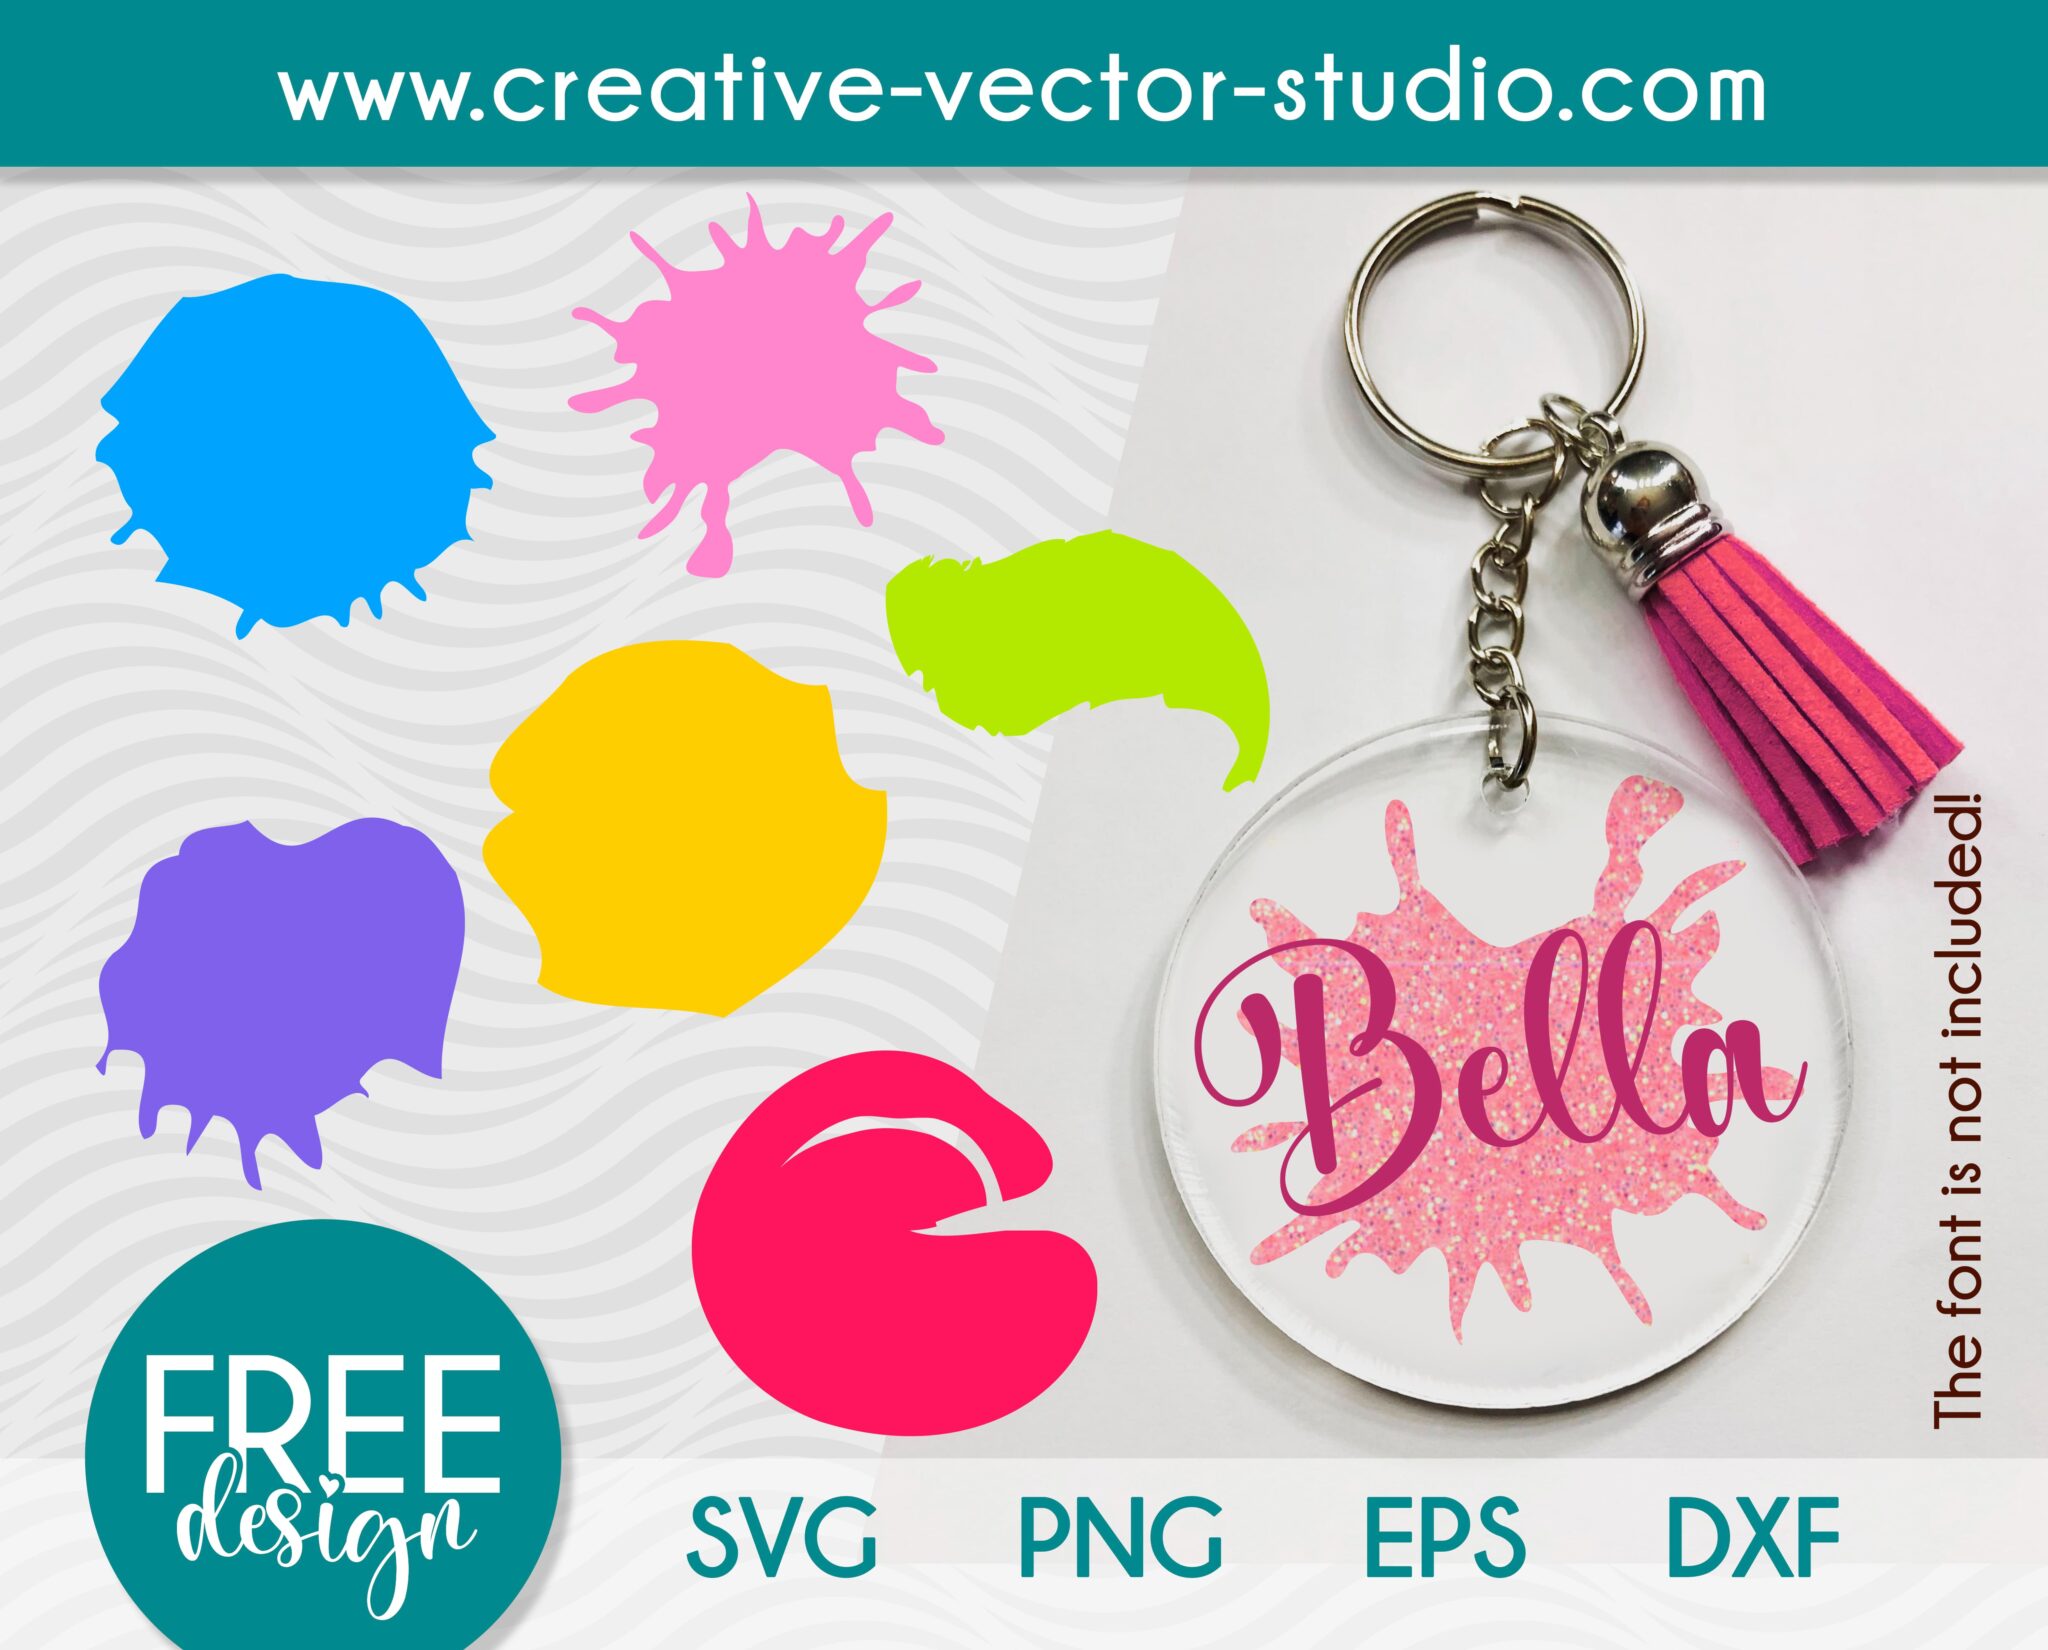 Free Paint Brush Stroke SVG Keychain Pattern #3 | Creative Vector Studio